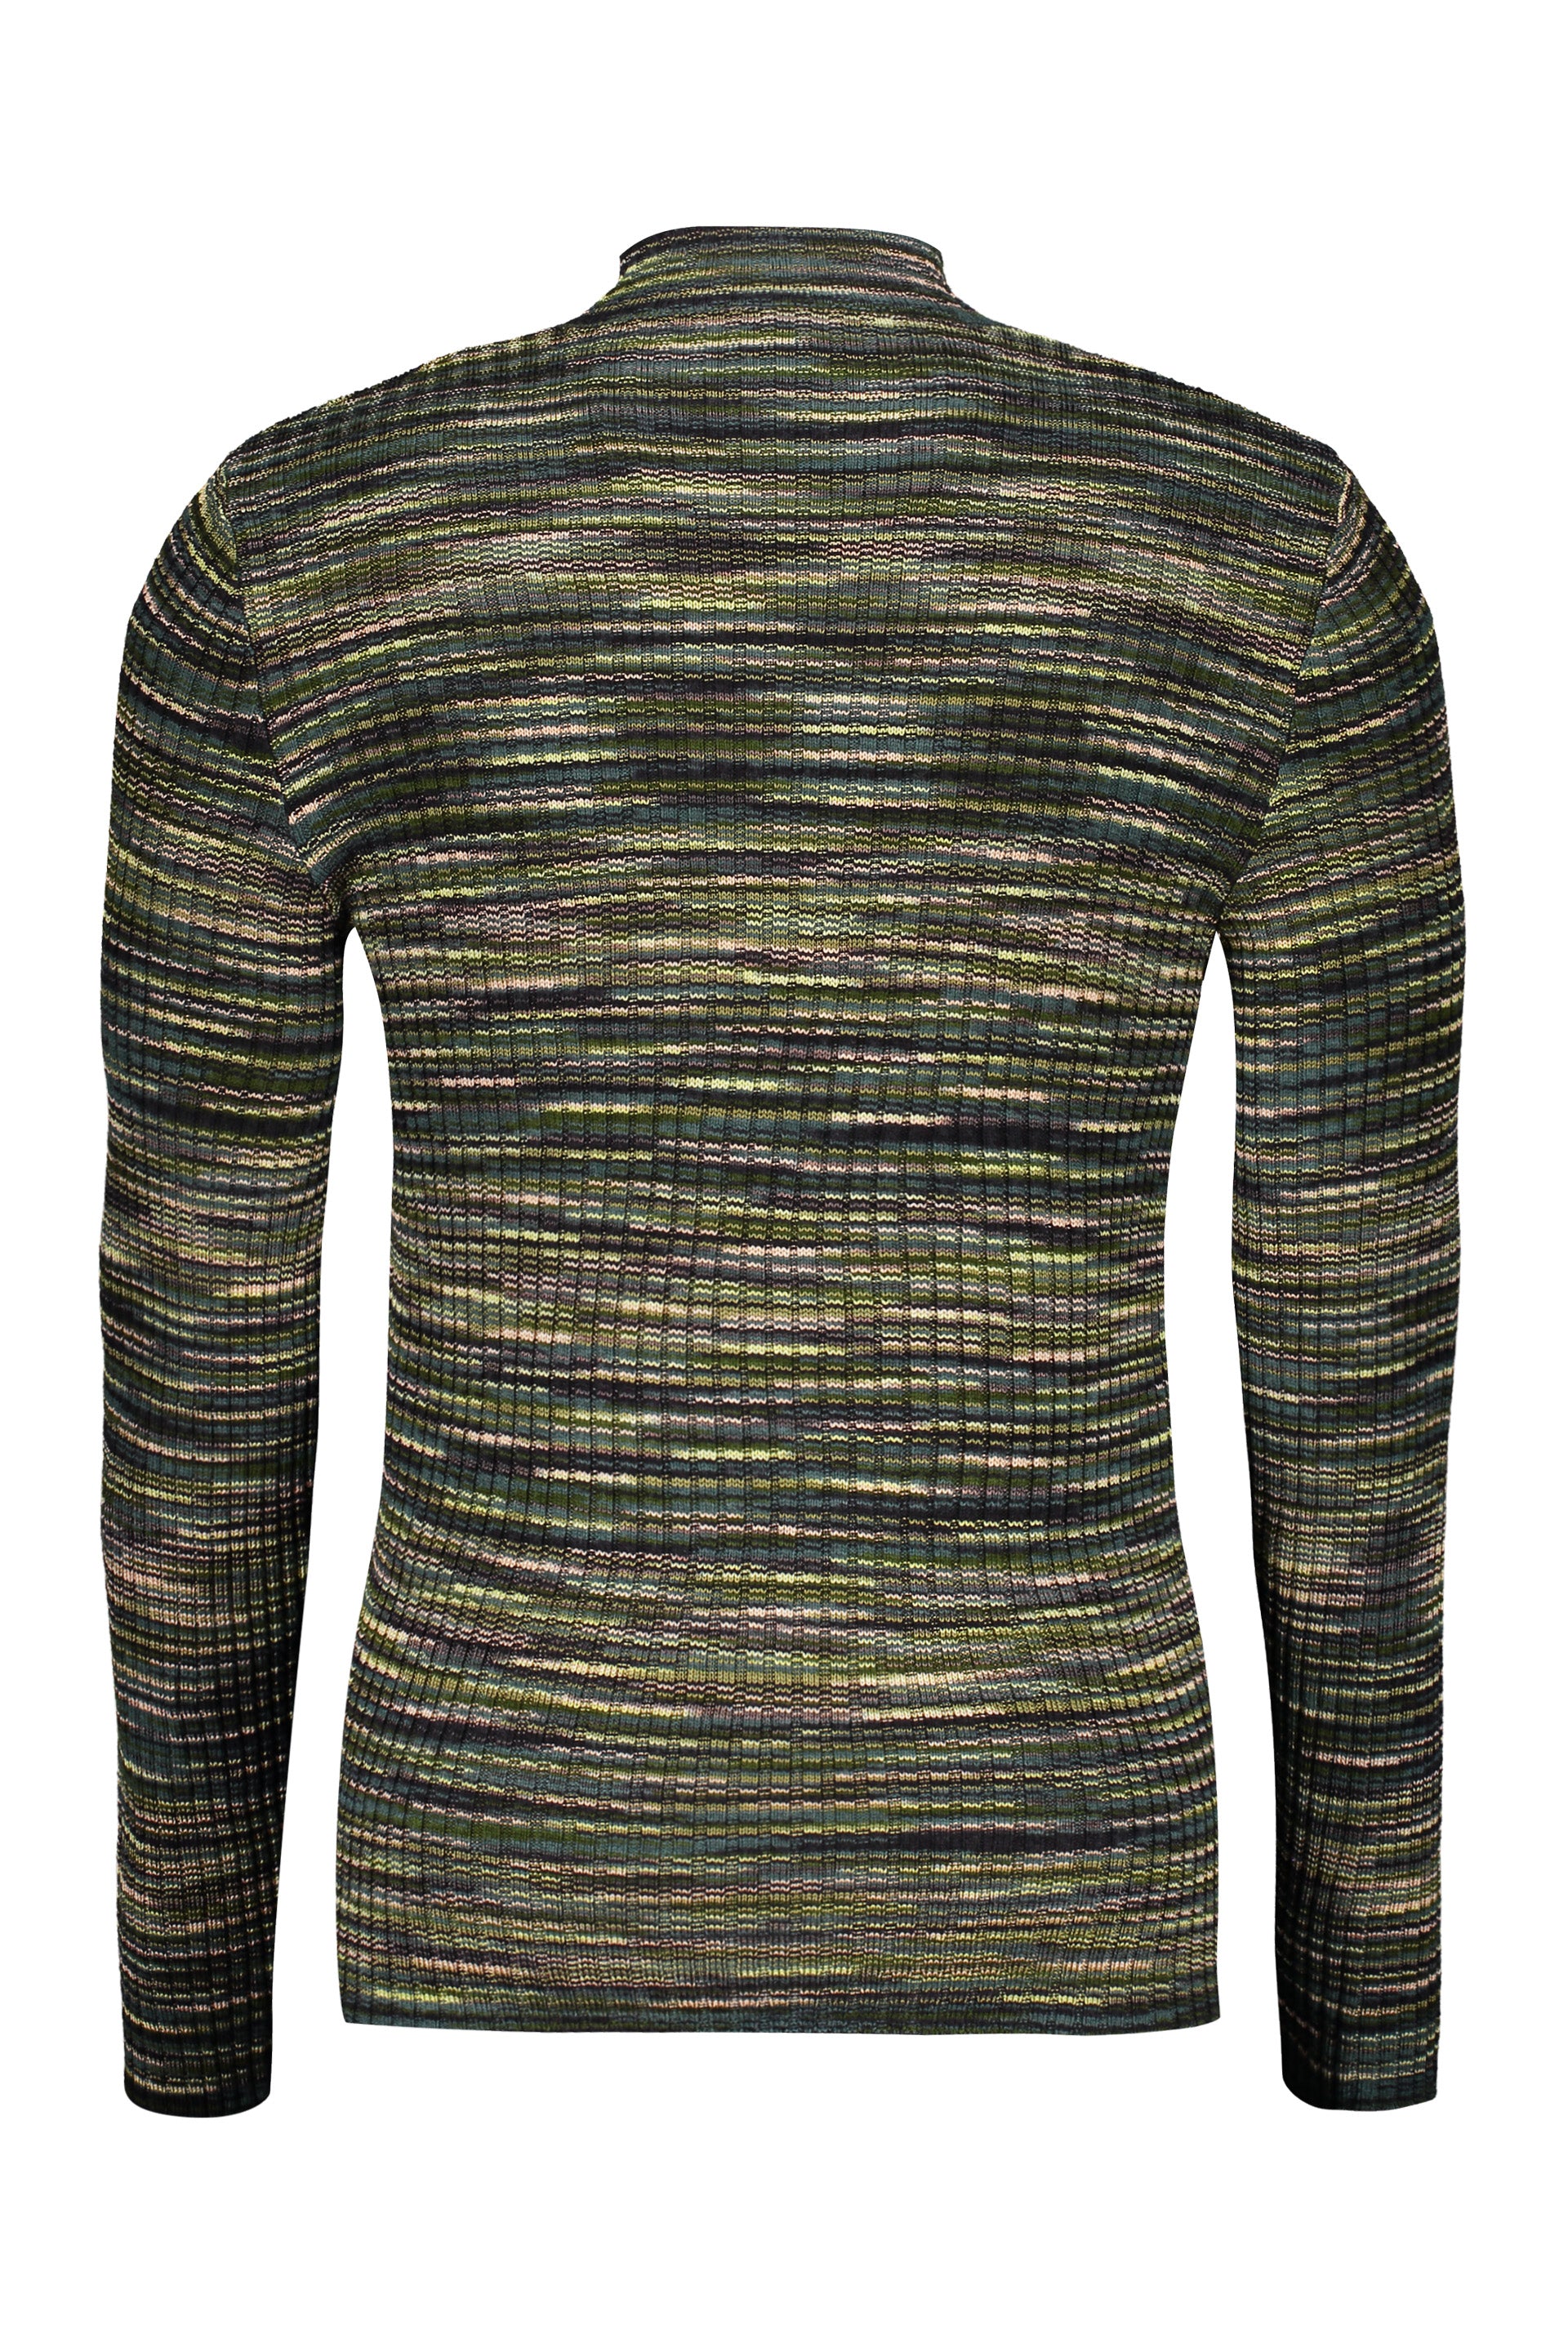 Ribbed wool turtleneck sweater